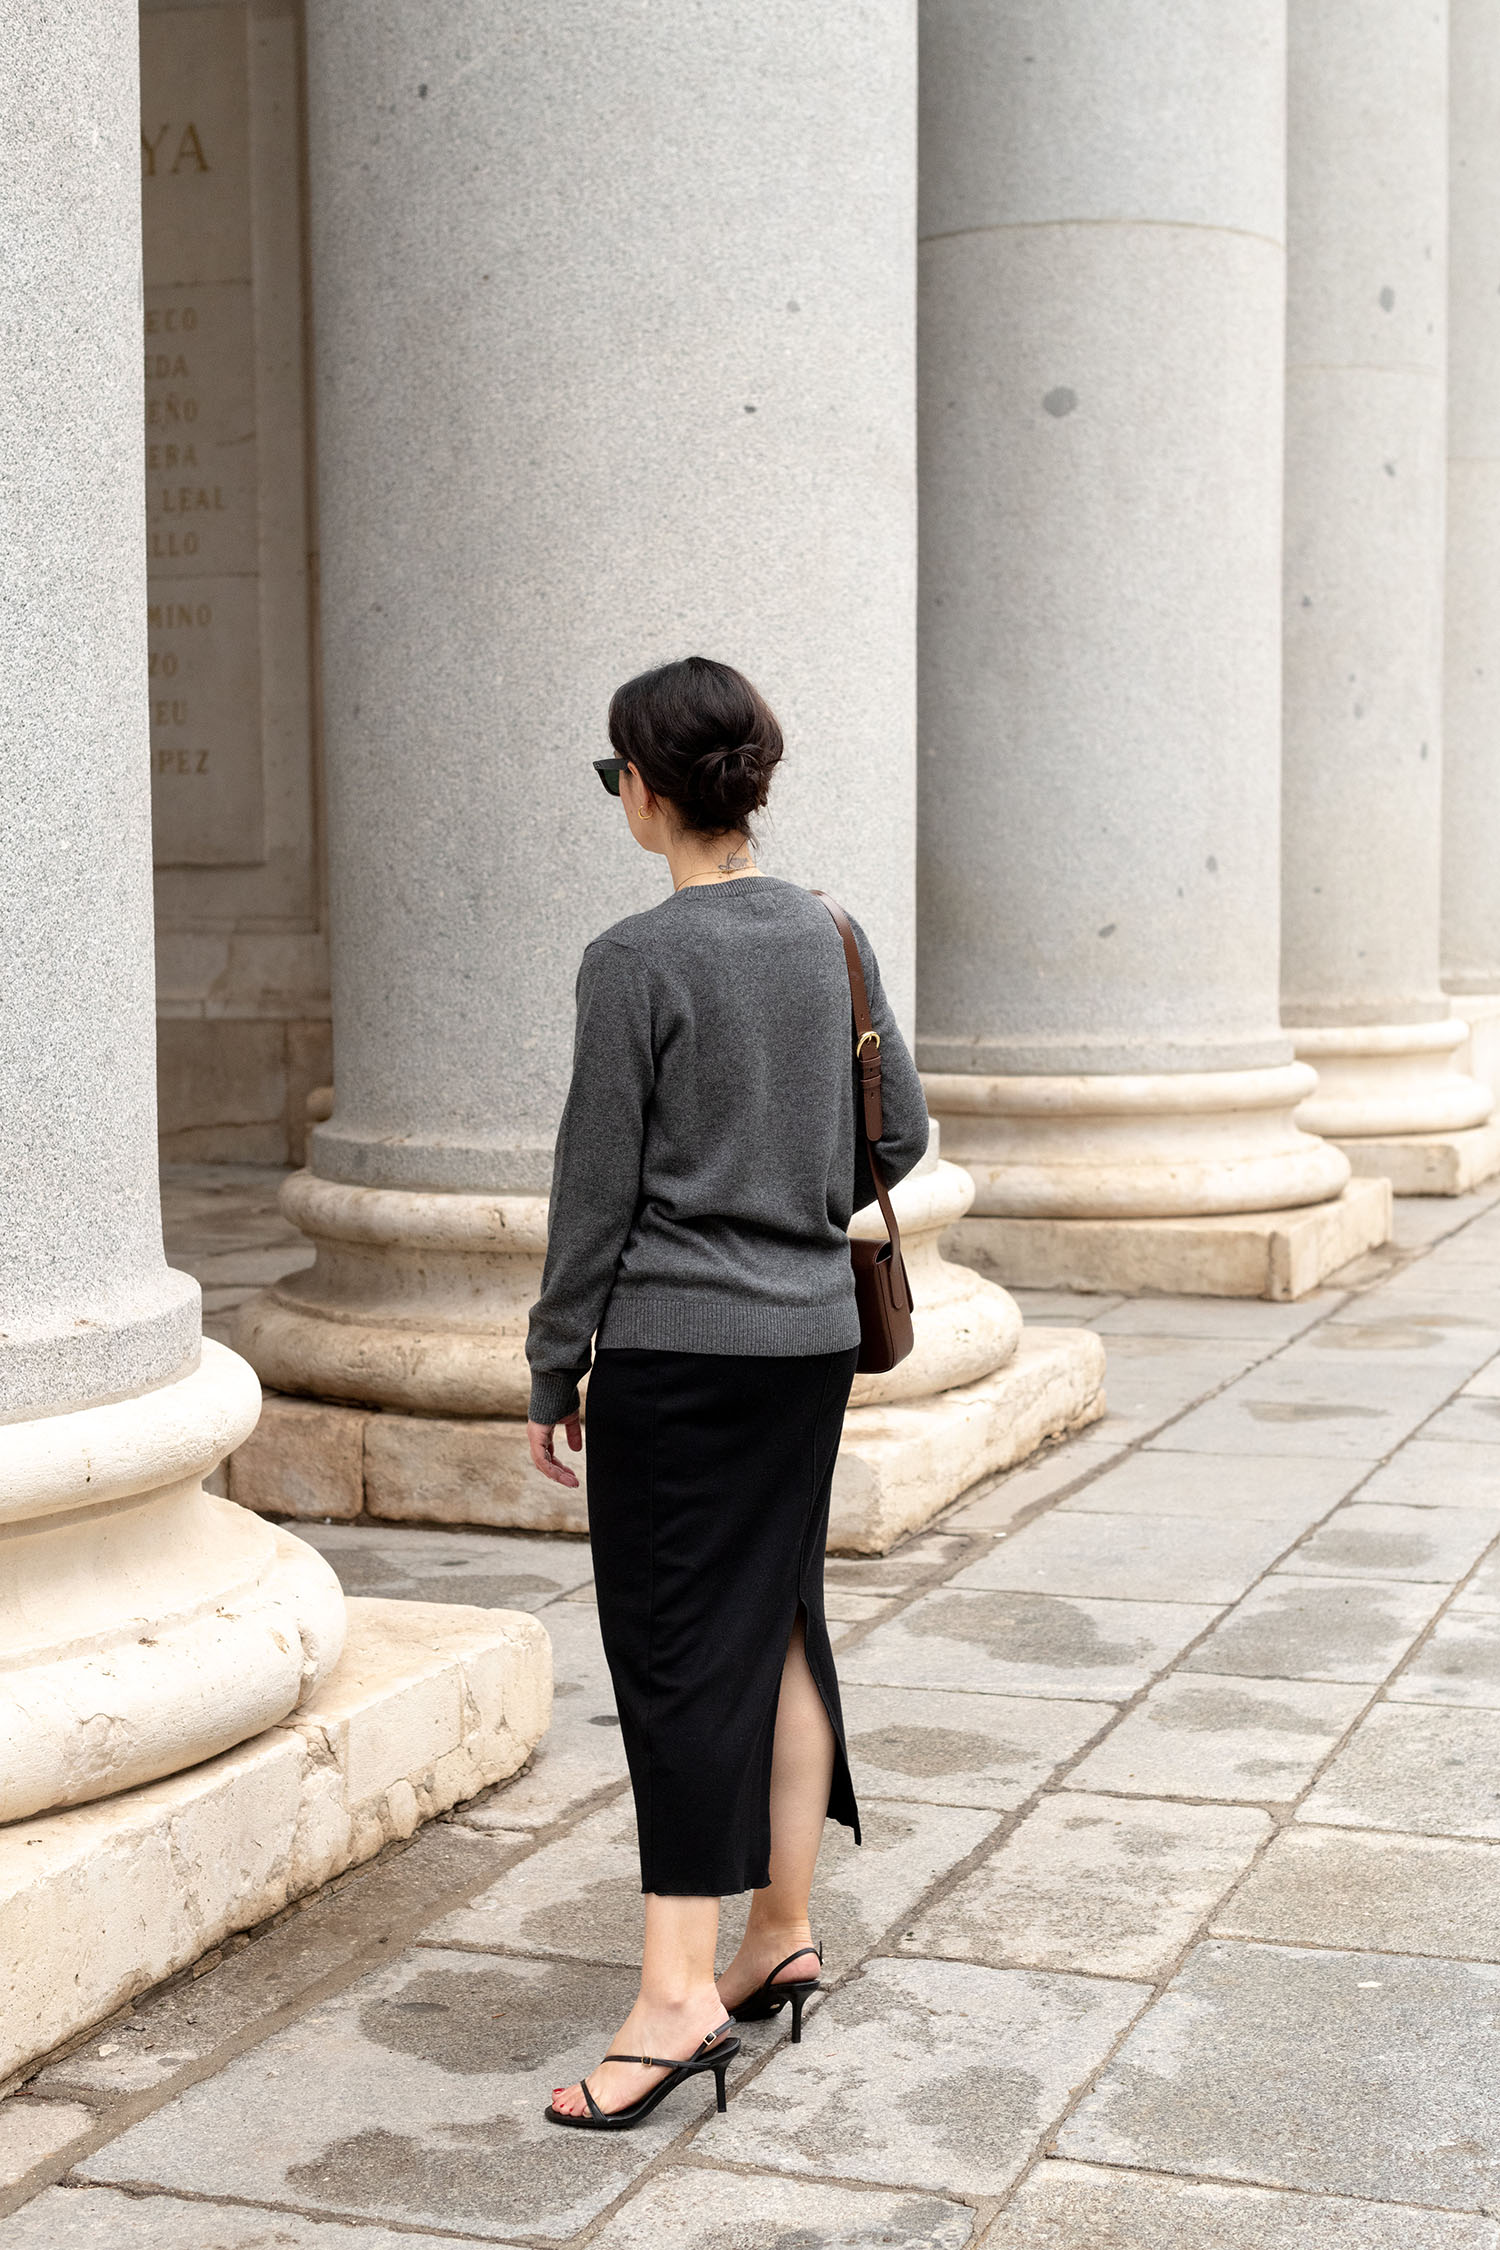 Coco & Voltaire - Zara sandals, Massimo Dutti cashmere sweater, Zara skirt